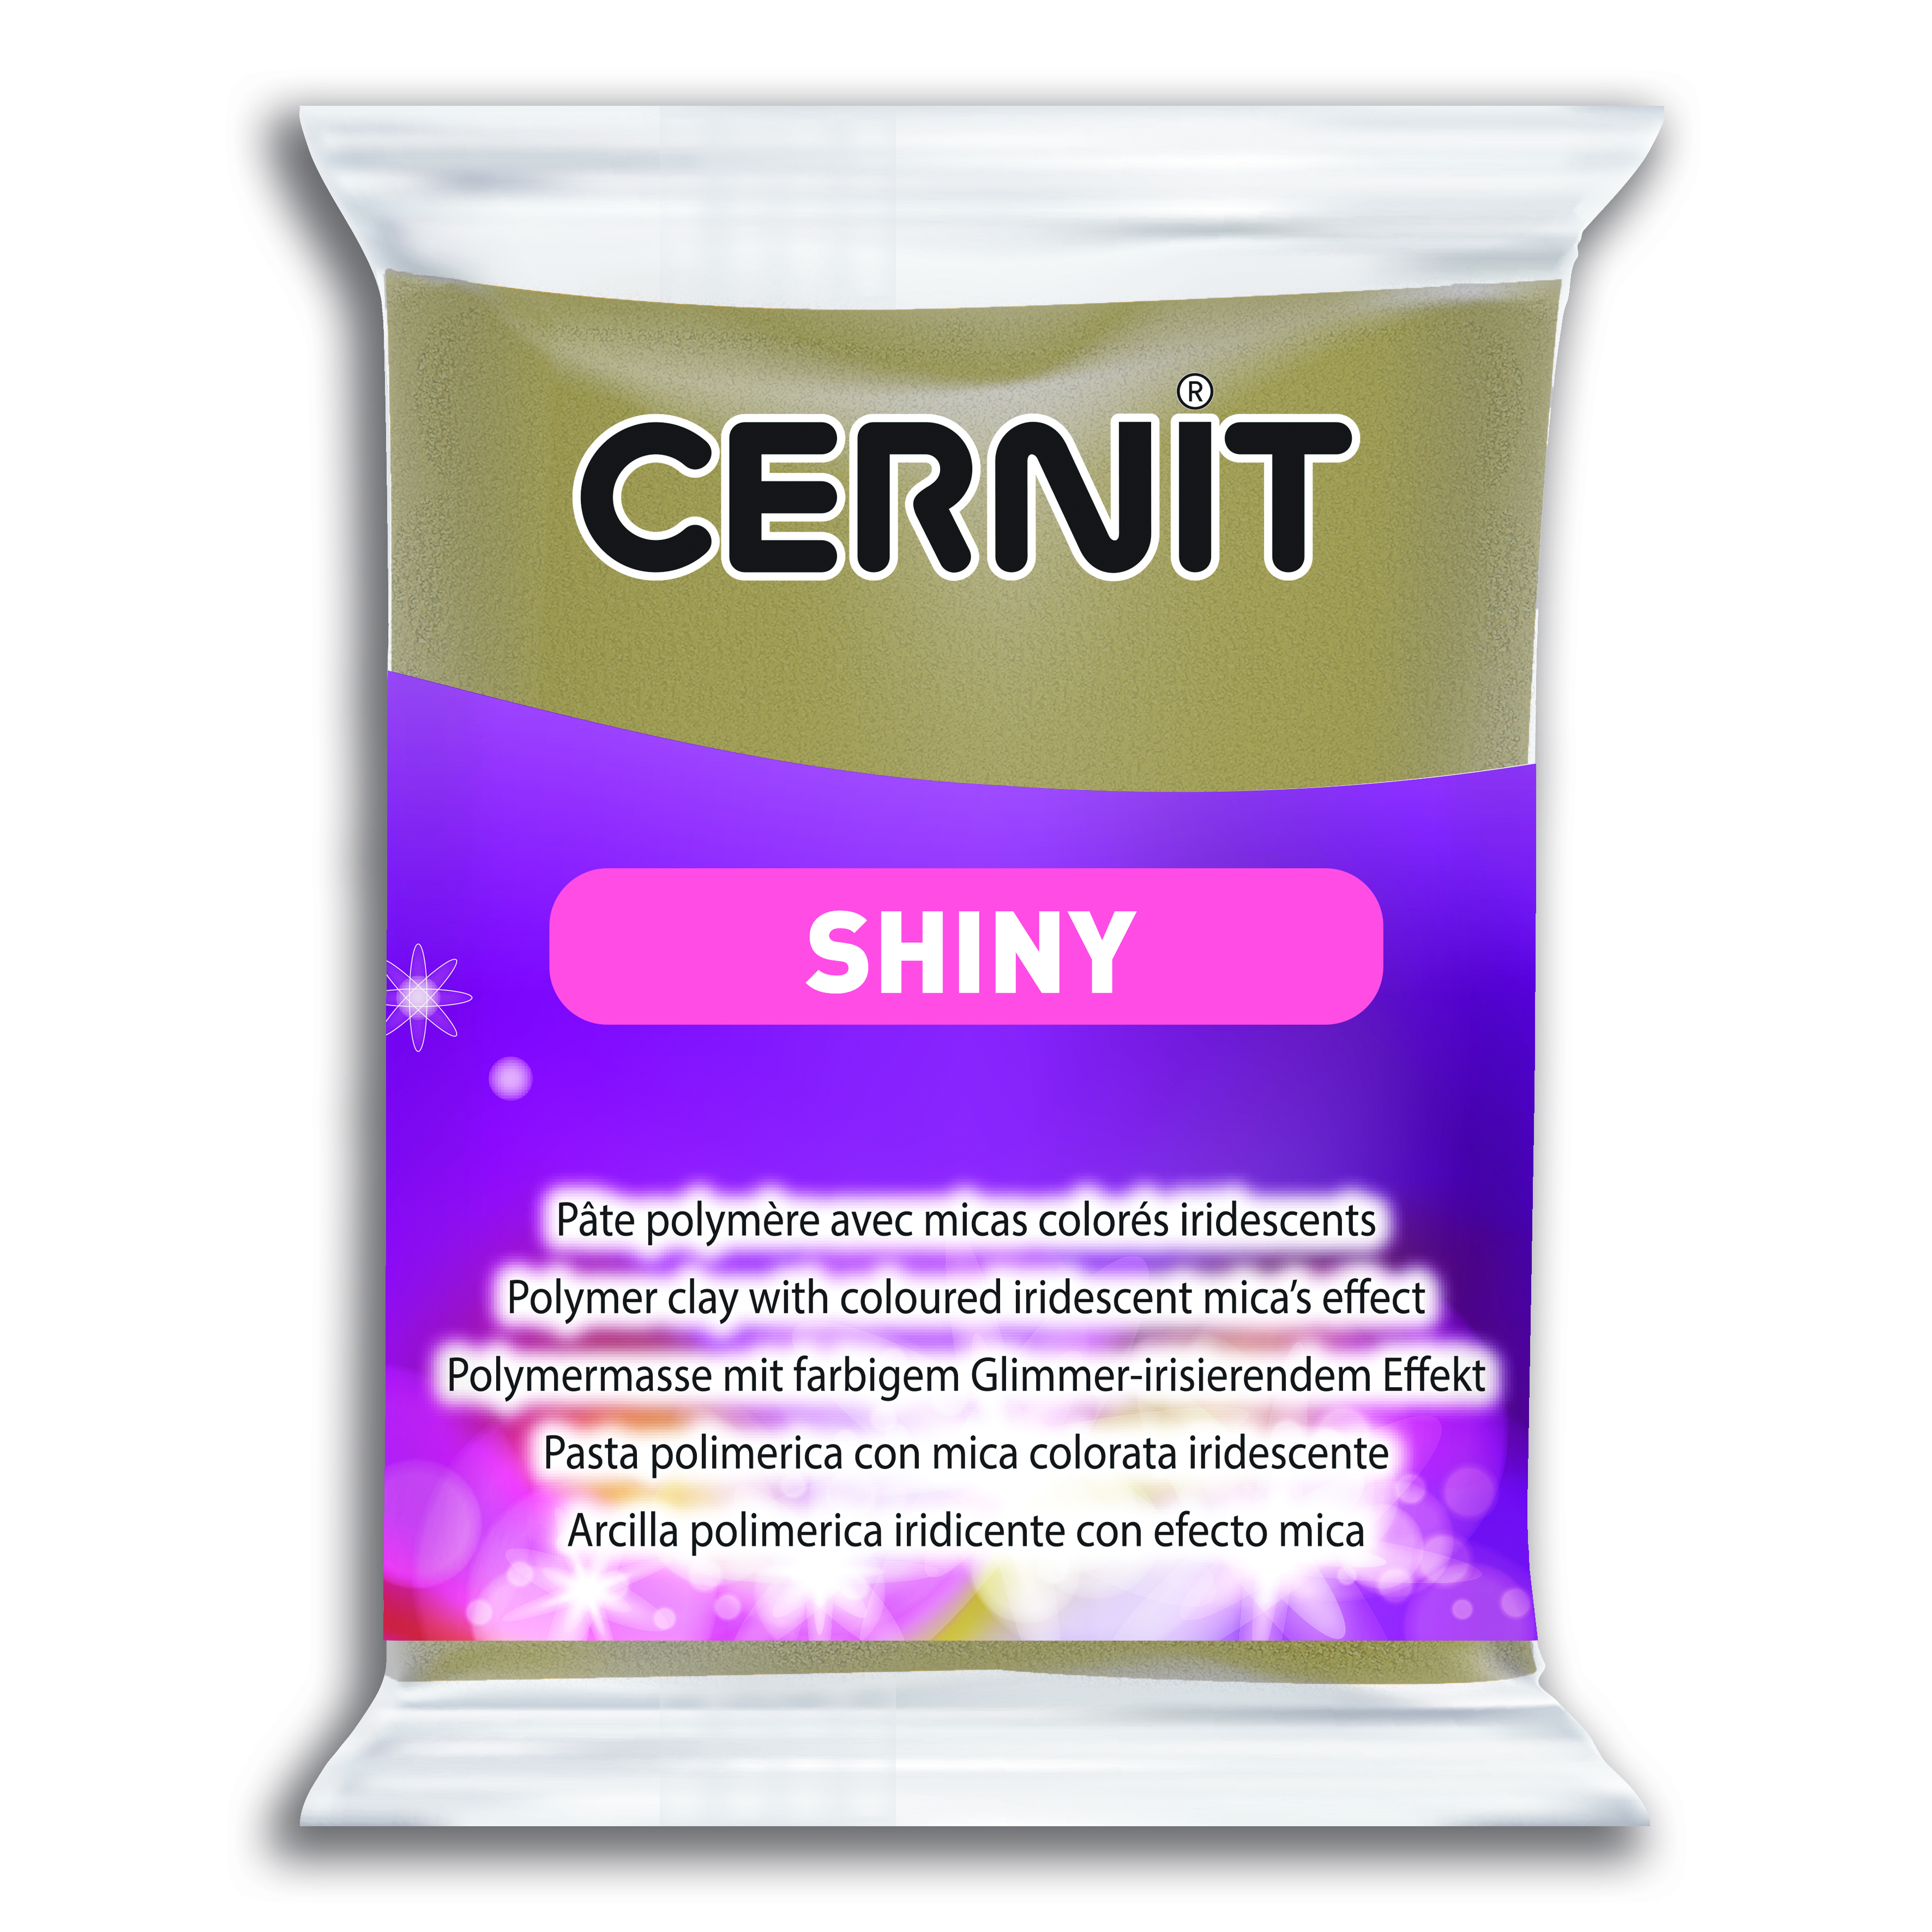 Cernit 56g. Shiny Or -050-